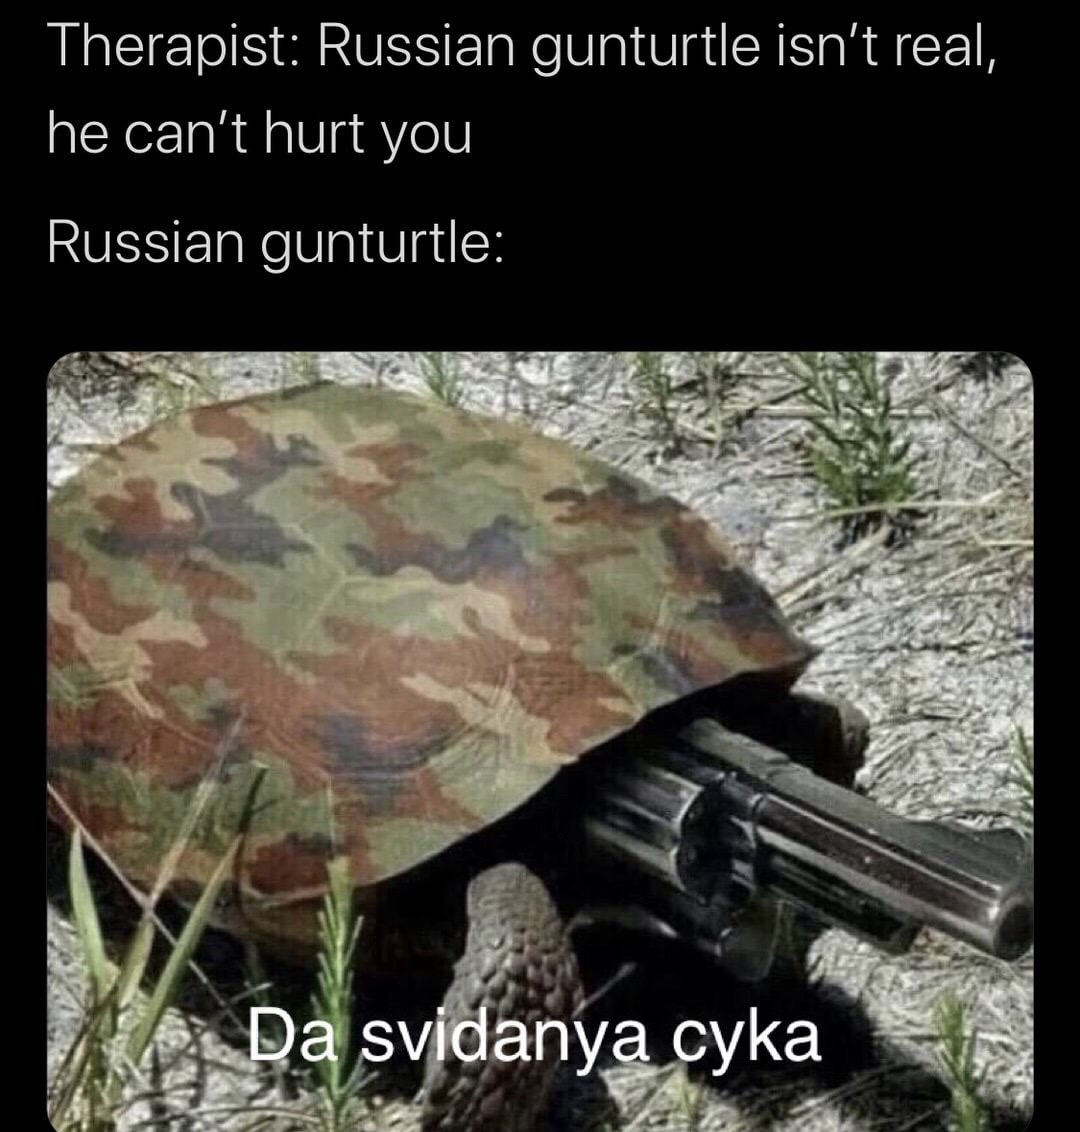 animals with guns - Therapist Russian gunturtle isn't real, he can't hurt you Russian gunturtle Da svidanya cyka